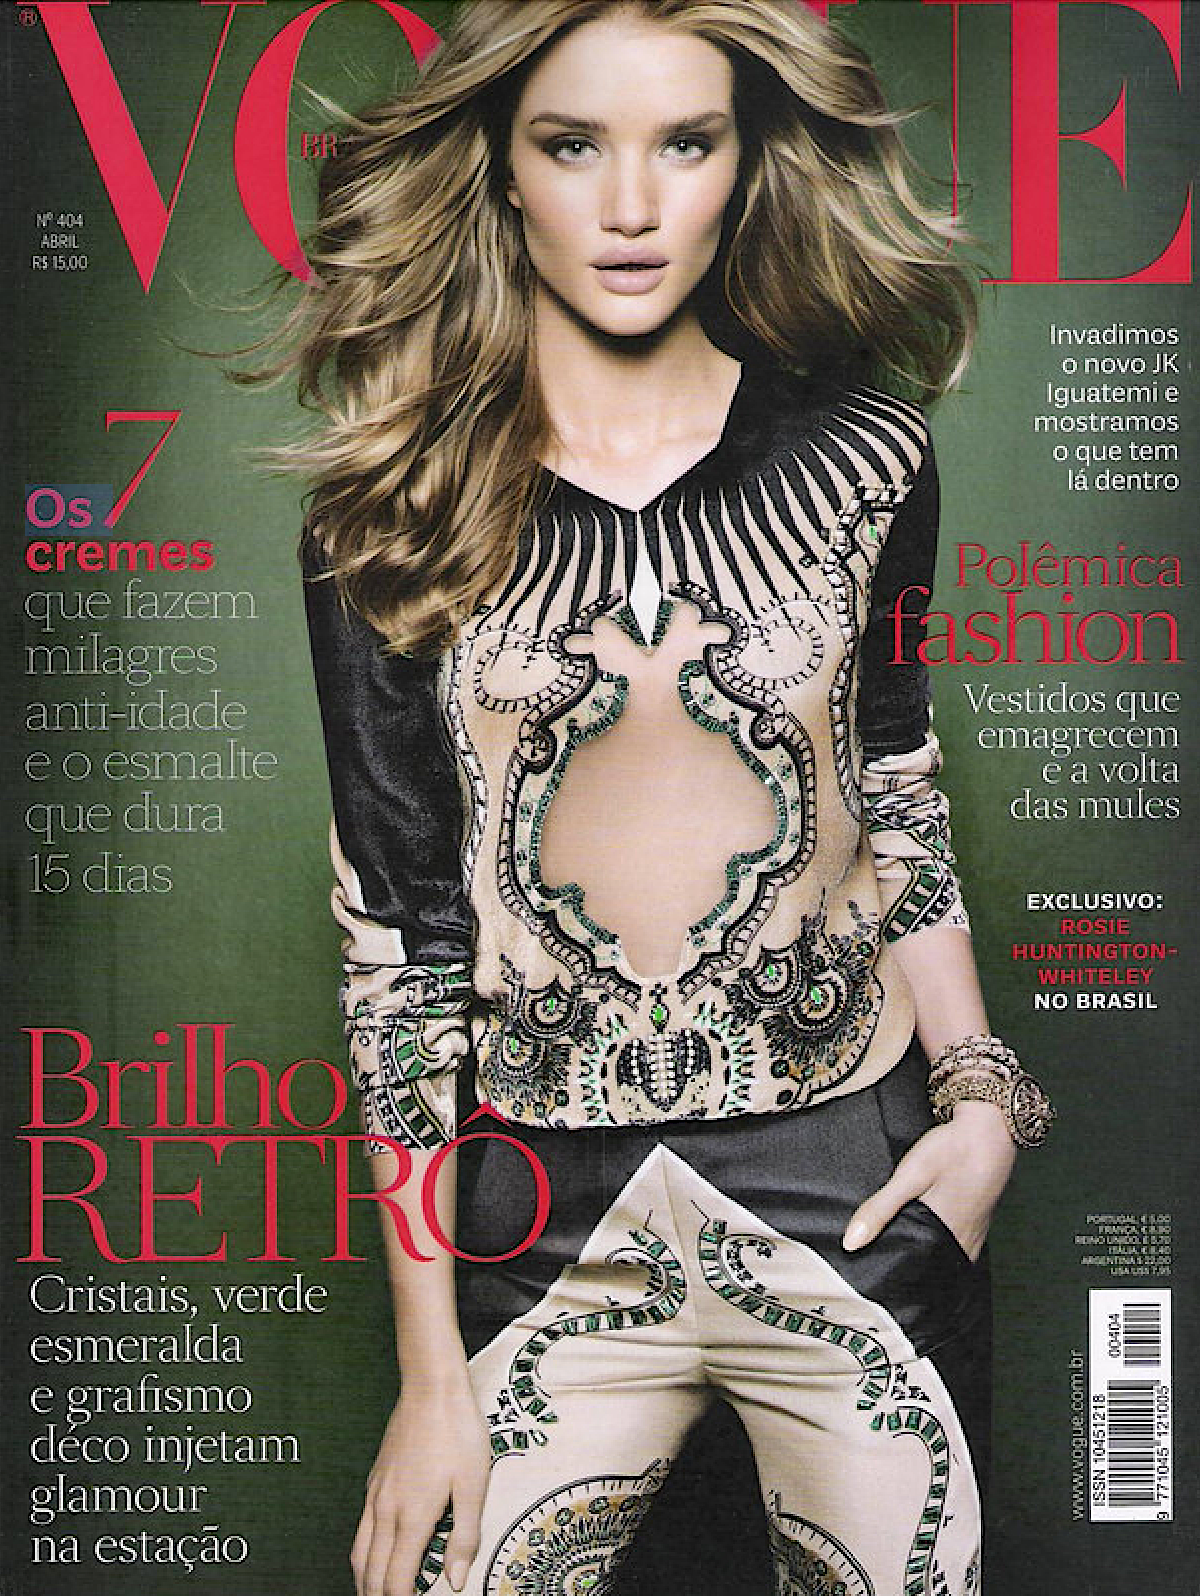 Rosie-Huntington-Whiteley-by-Henrique-Gendre-Vogue-Brazil-July-2012-3.png